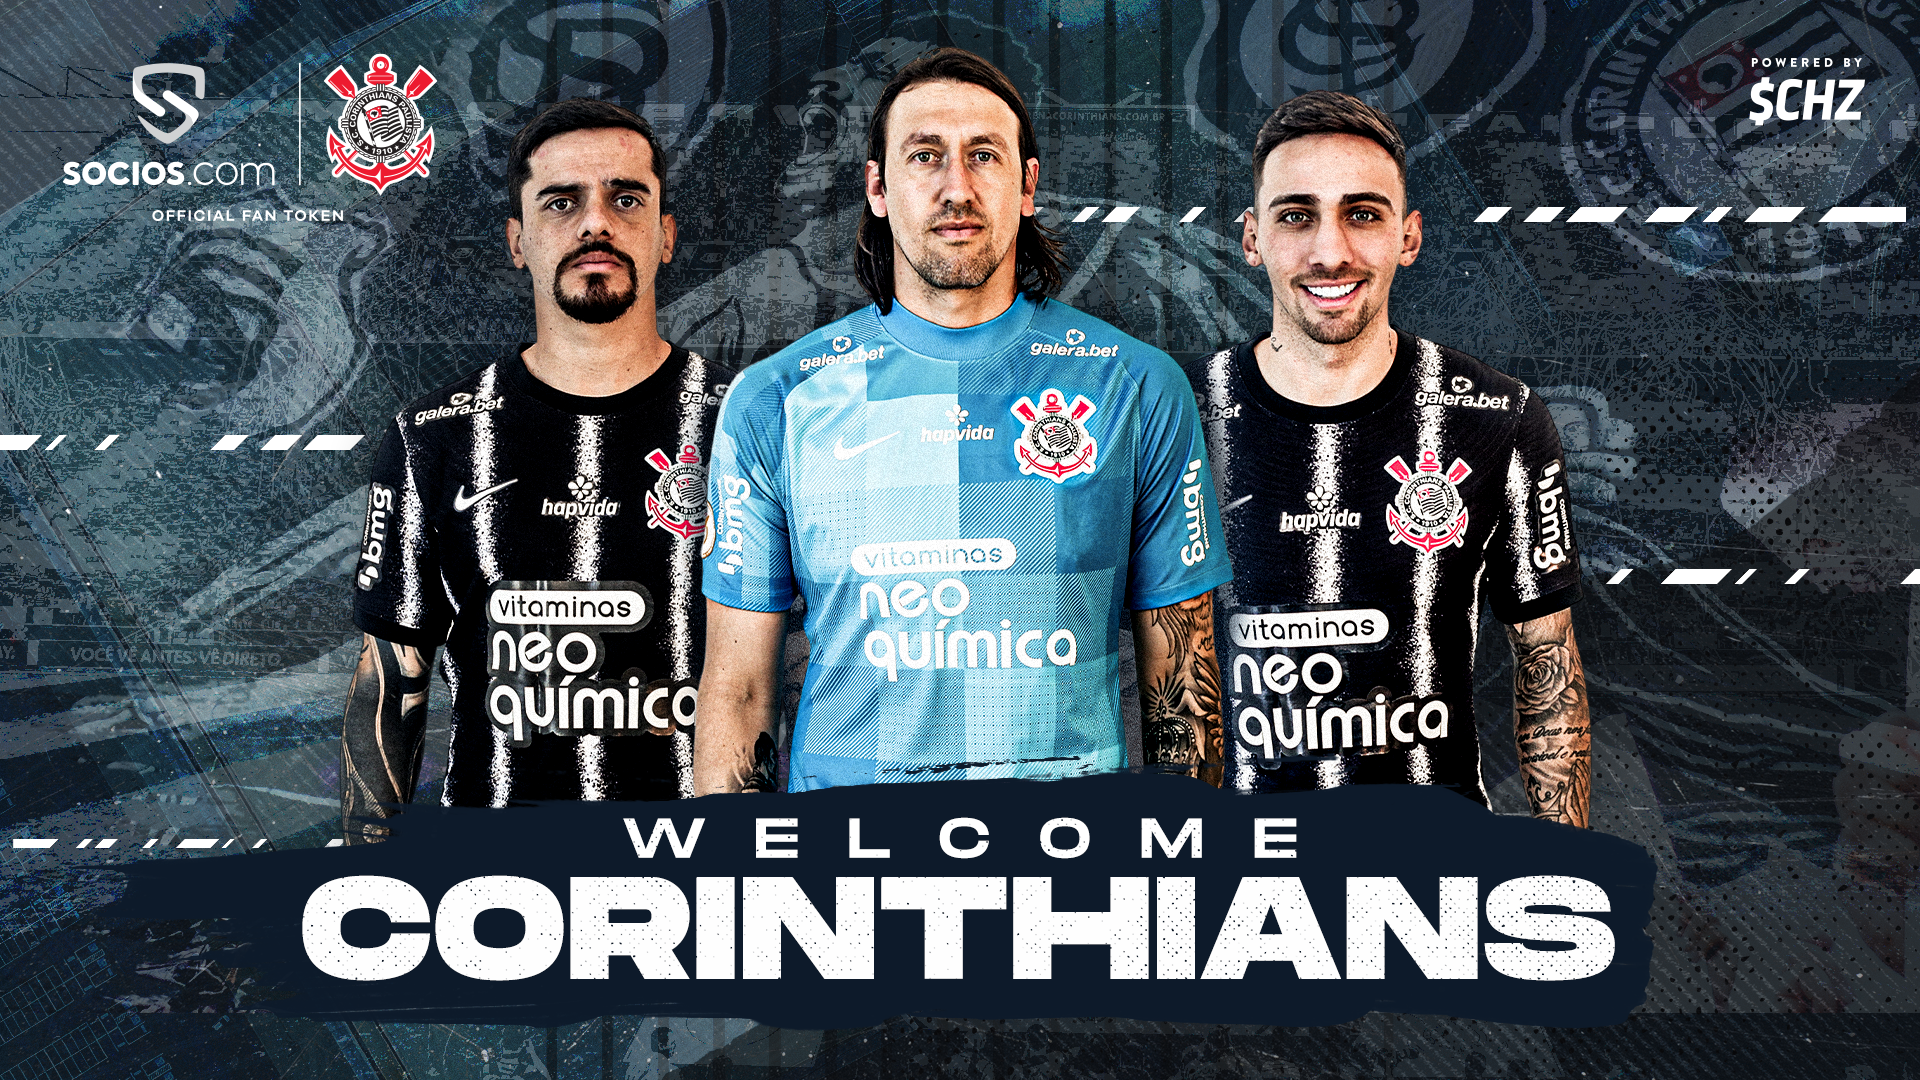 Corinthians announces fan token $SCCP to interact with fans | finance